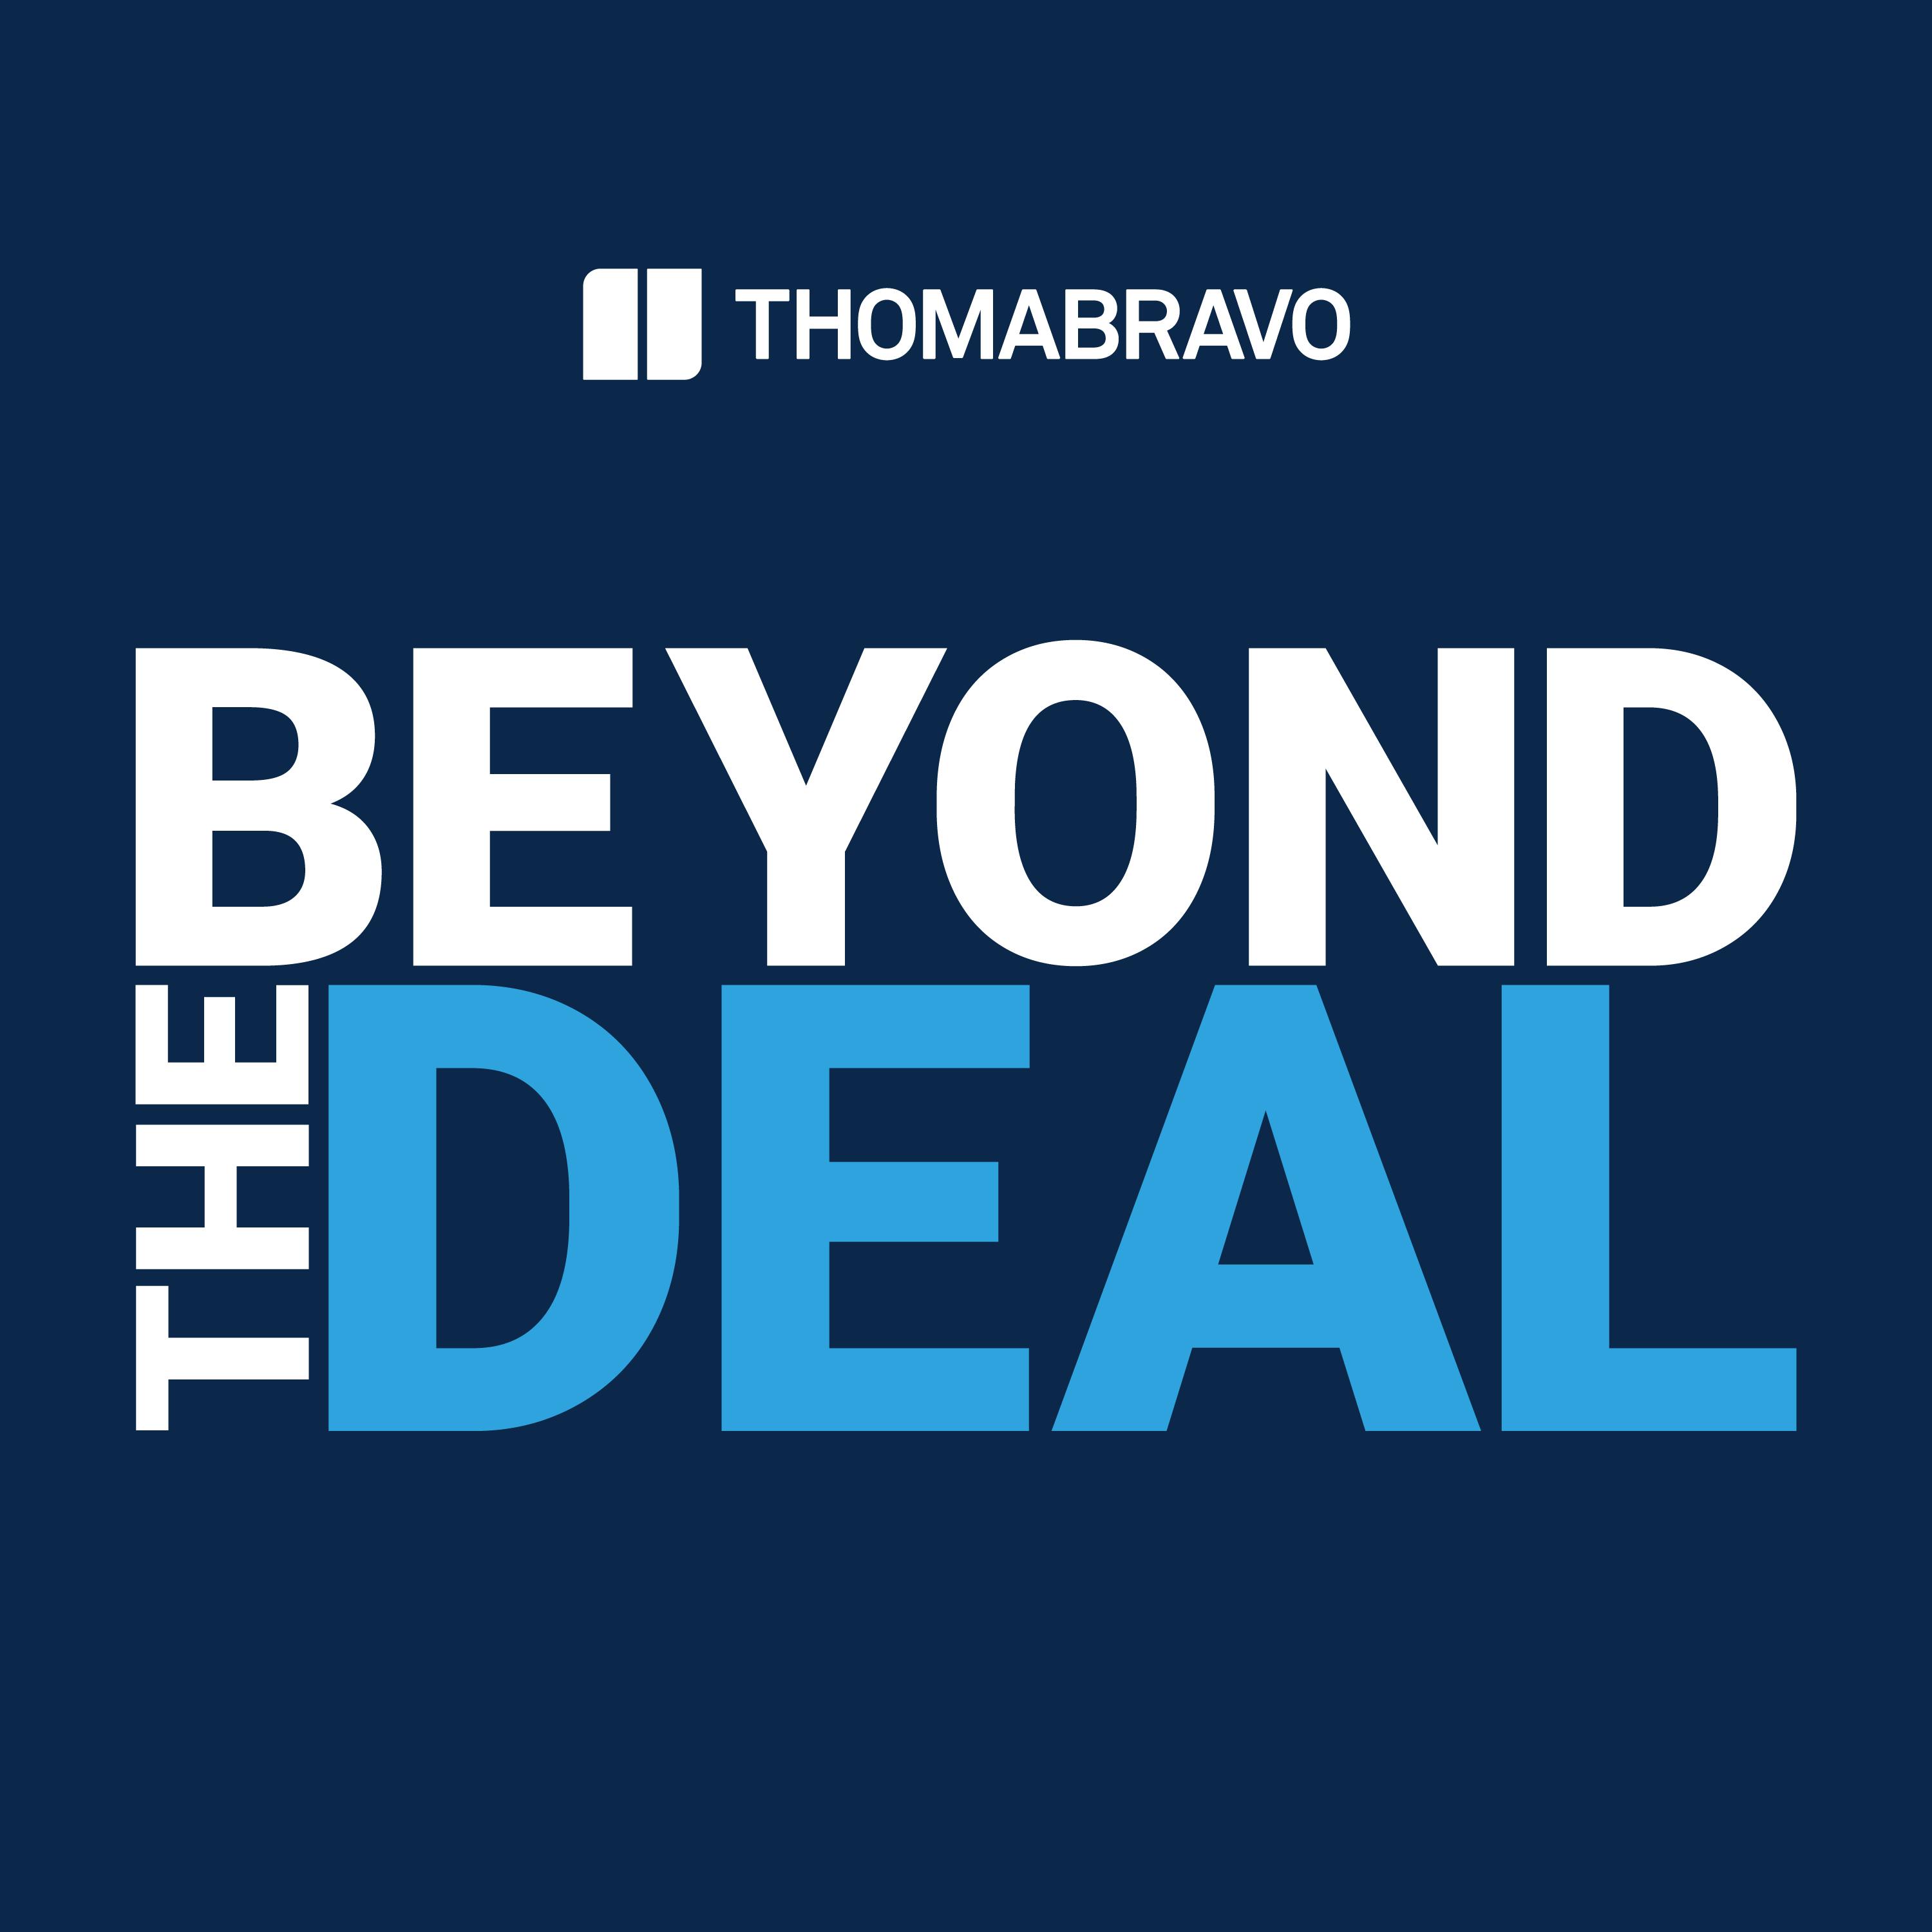 Beyond the Partnership Between Carl Thoma and Orlando Bravo